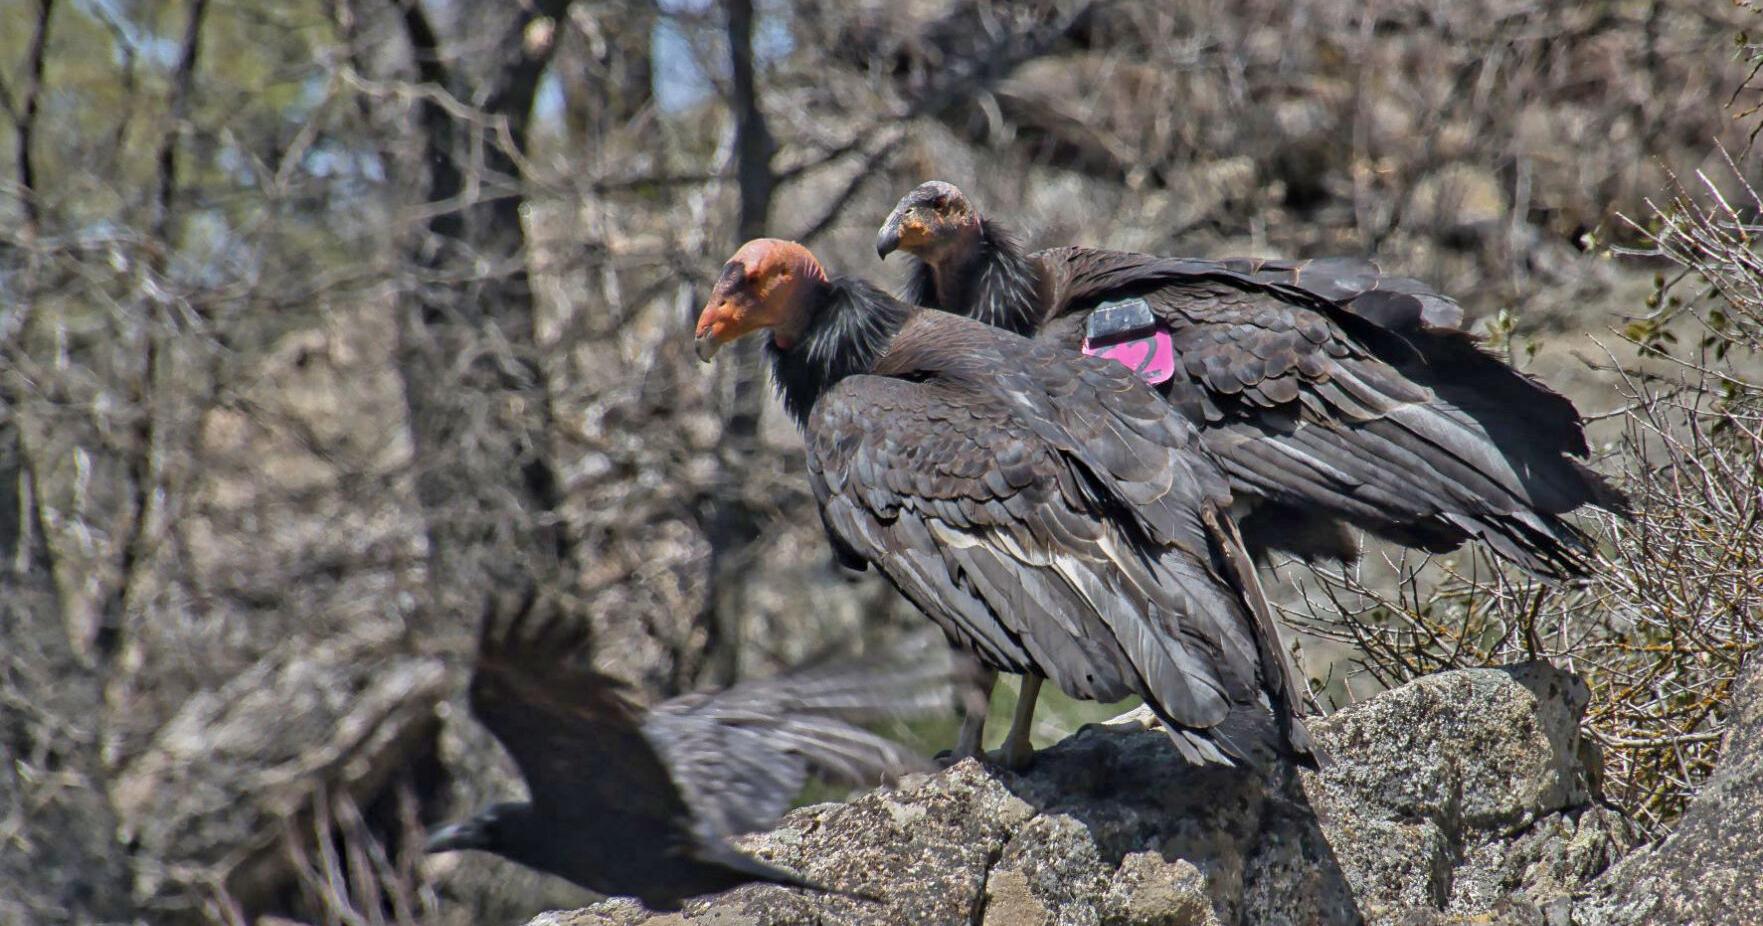 Pen in Hand: Two California Condor encounters a century apart